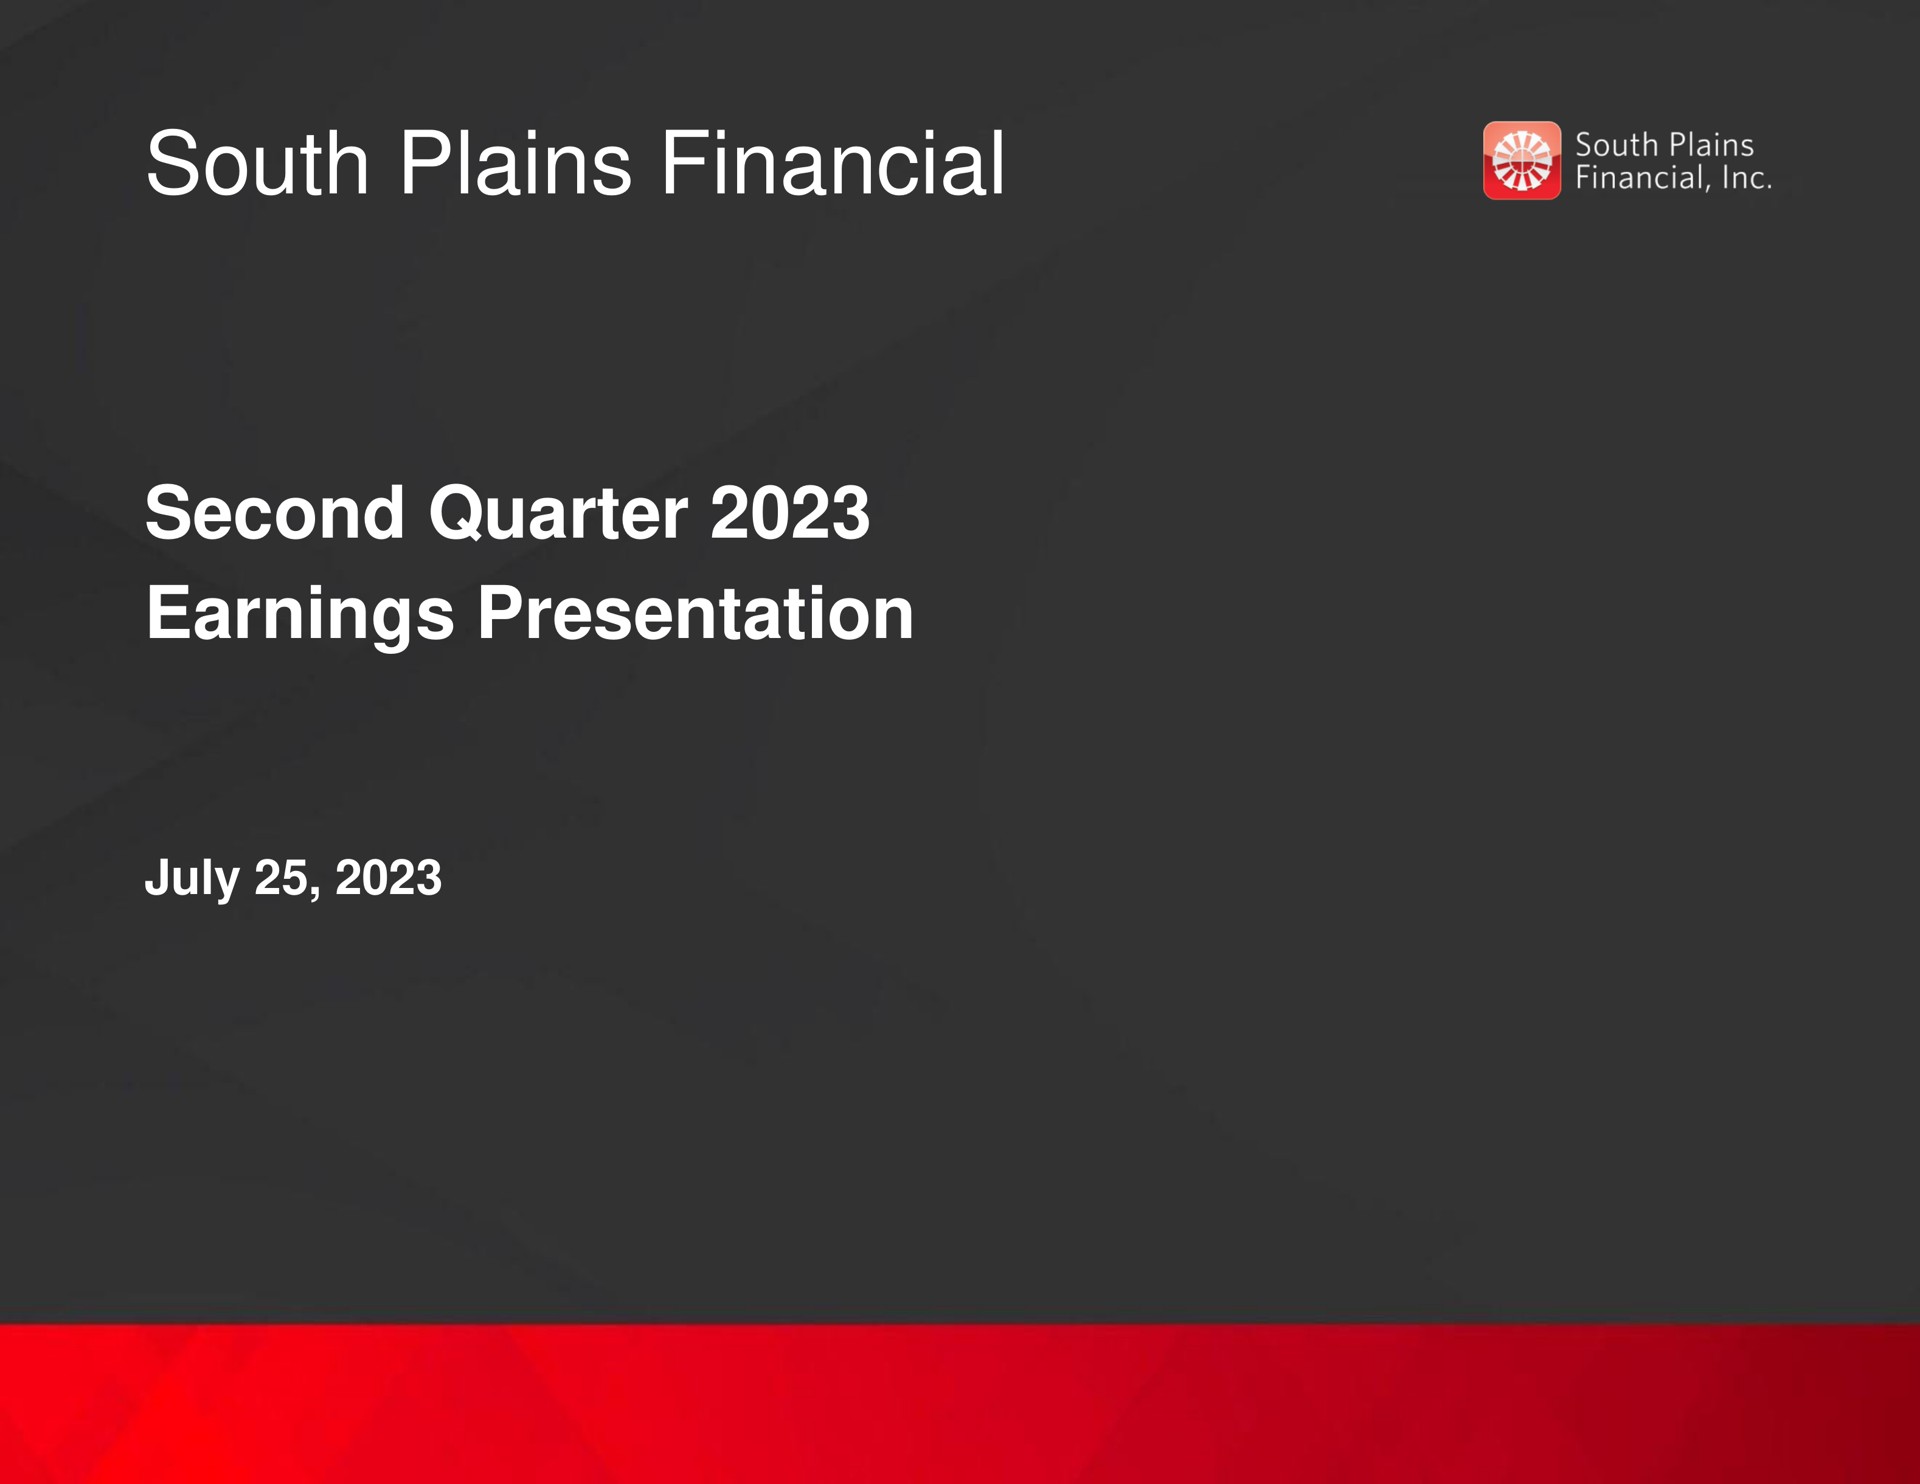 south plains financial second quarter earnings presentation | South Plains Financial